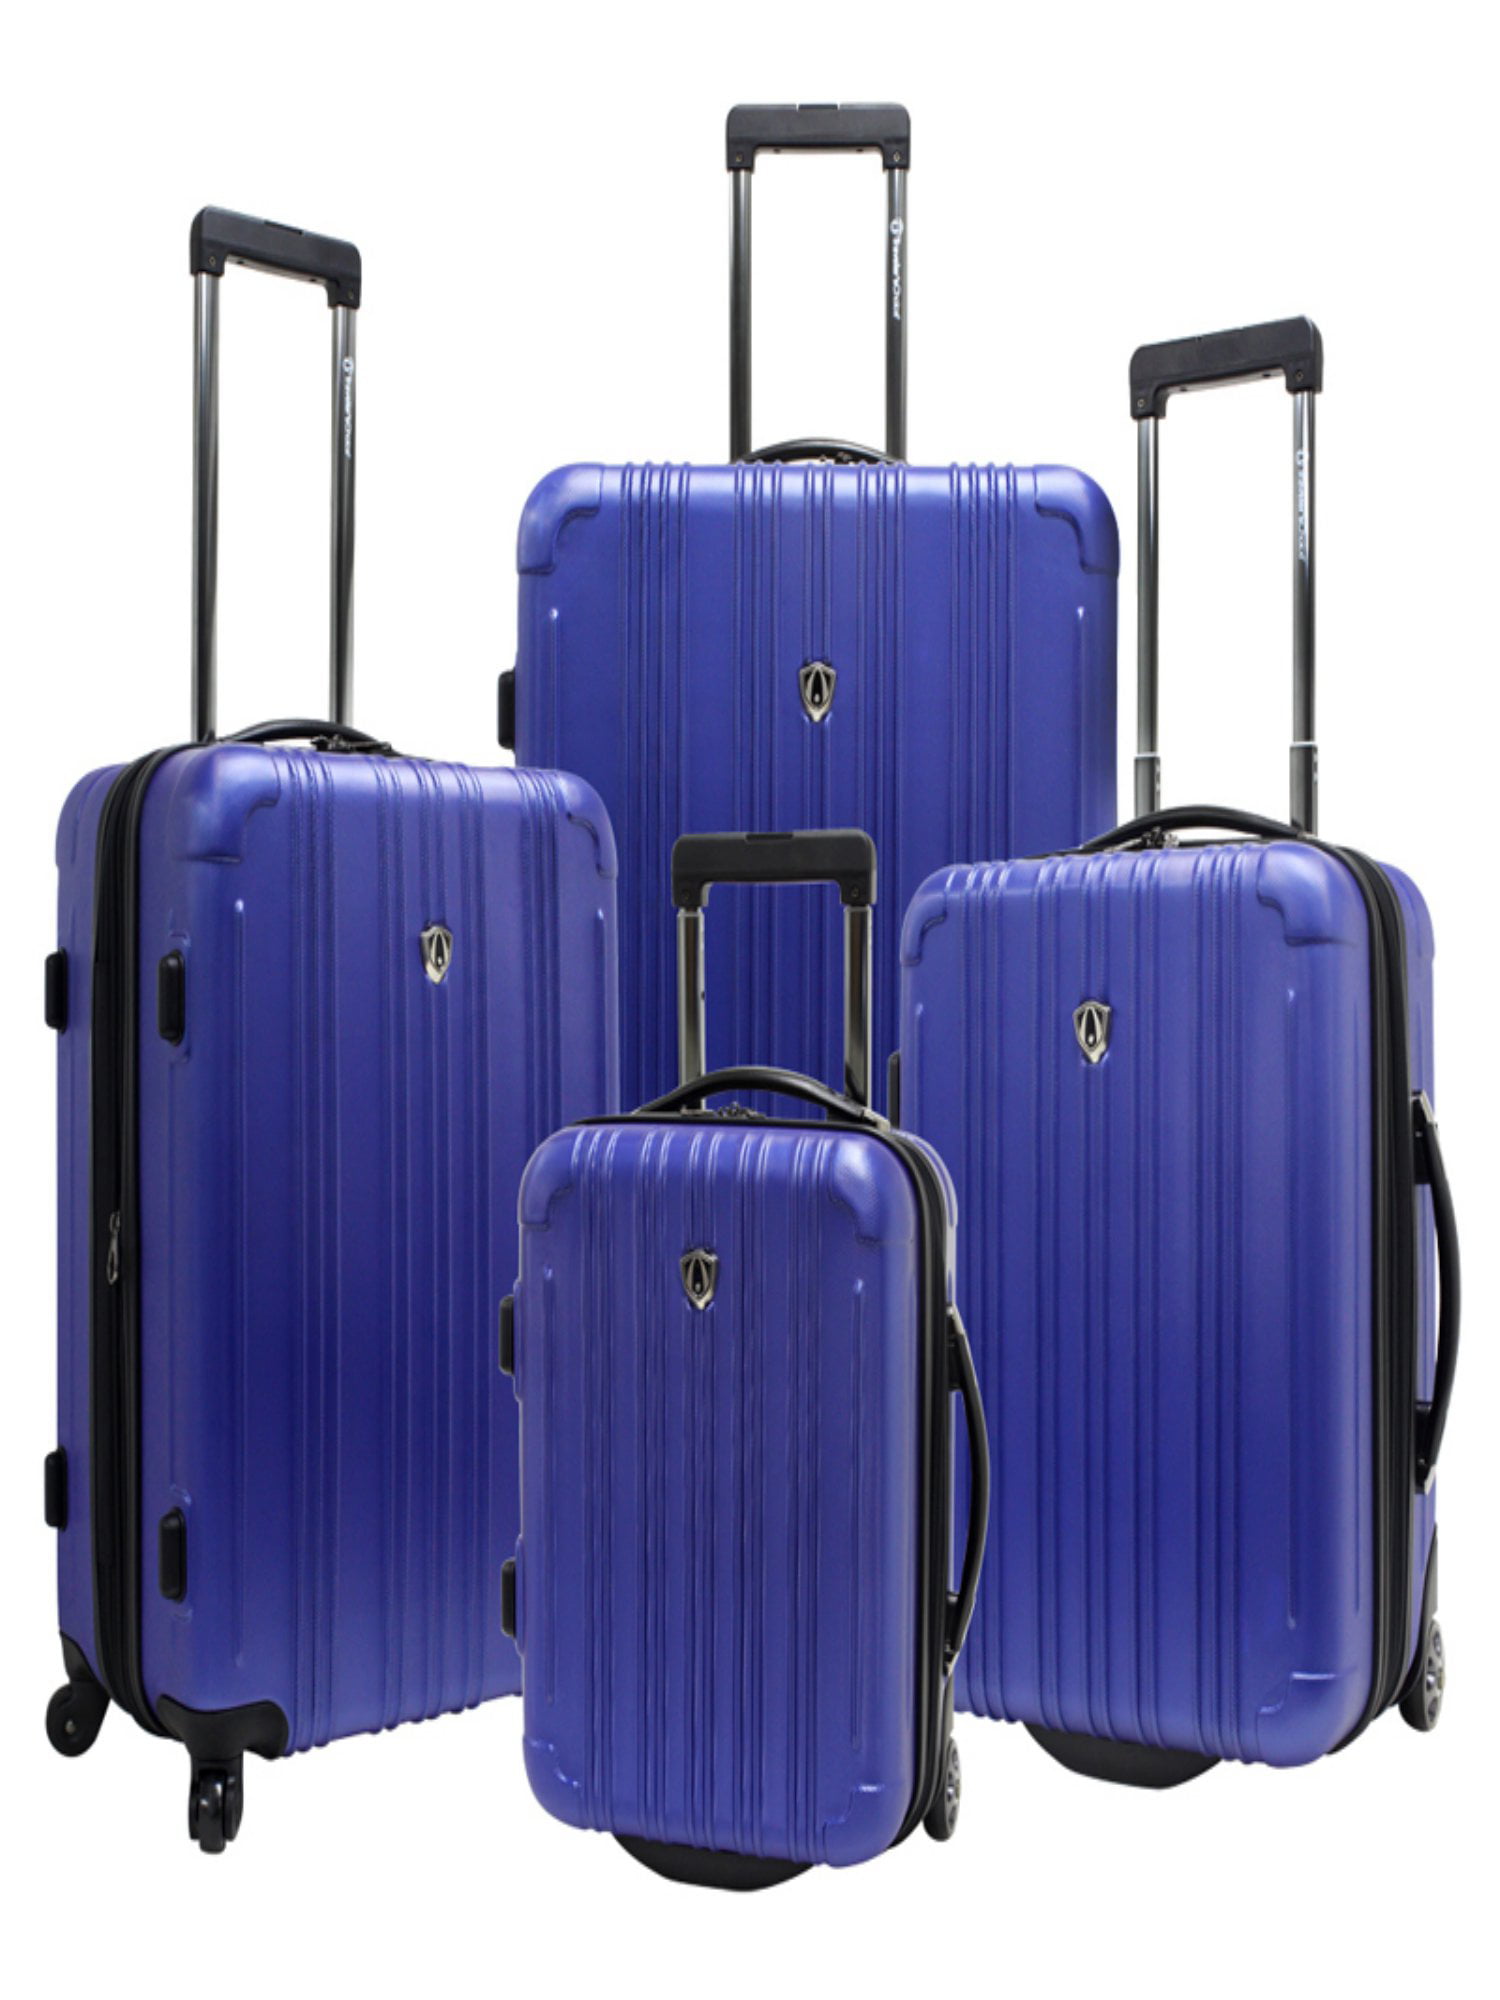 Travelers choice luggage